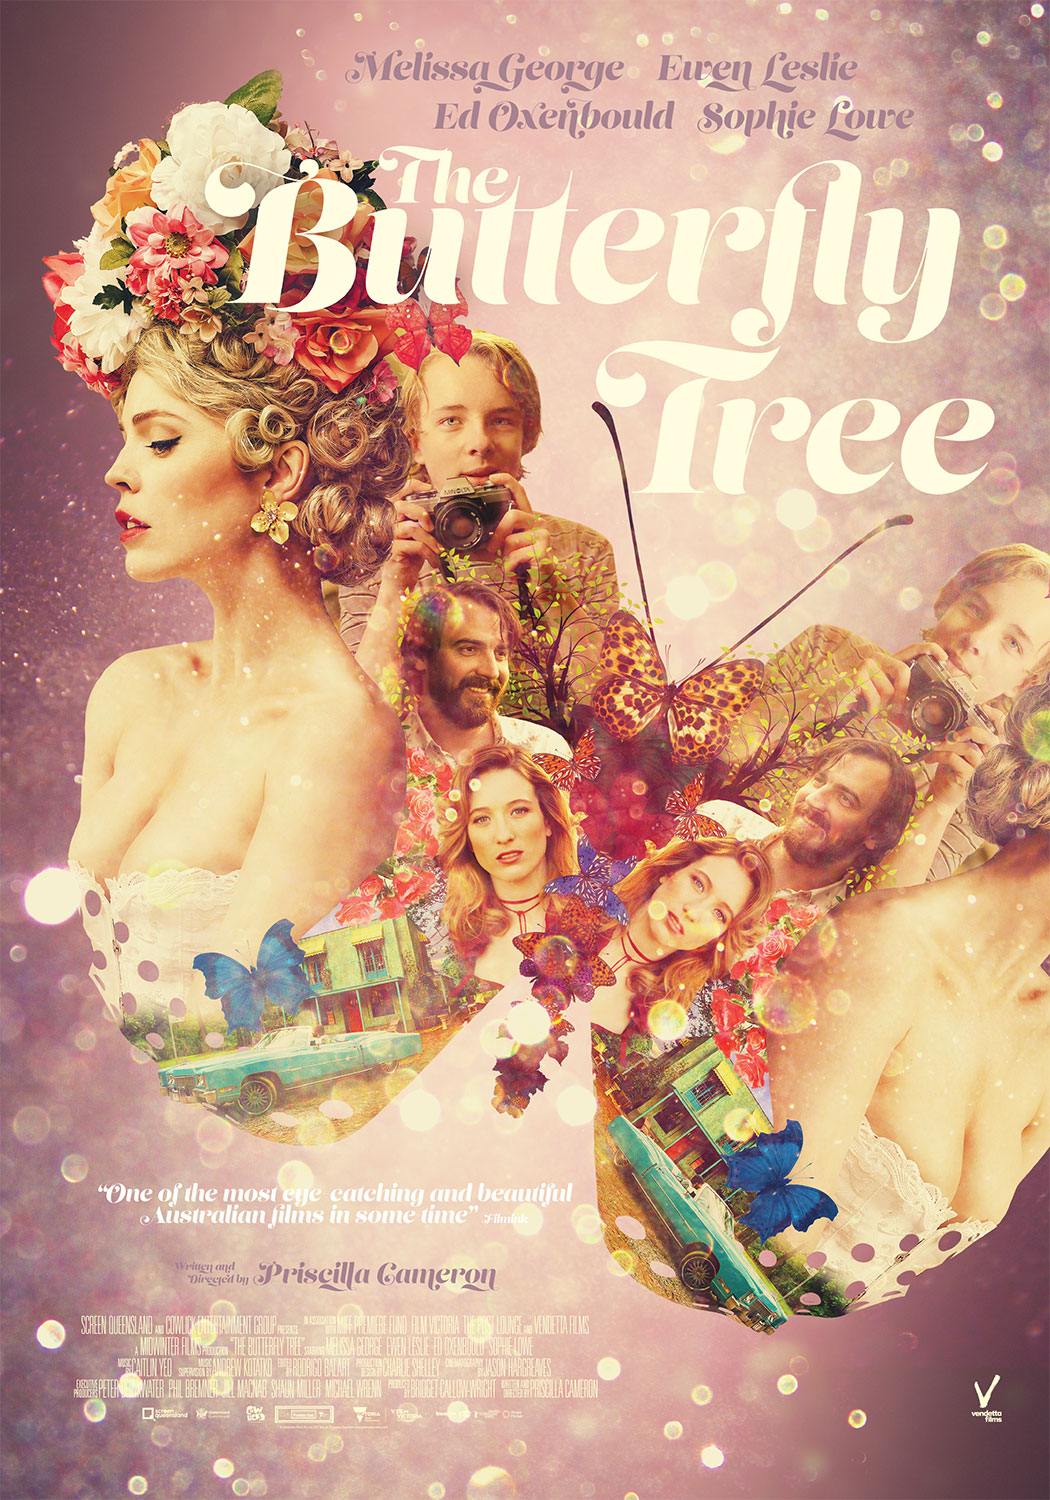 Nonton film The Butterfly Tree layarkaca21 indoxx1 ganool online streaming terbaru